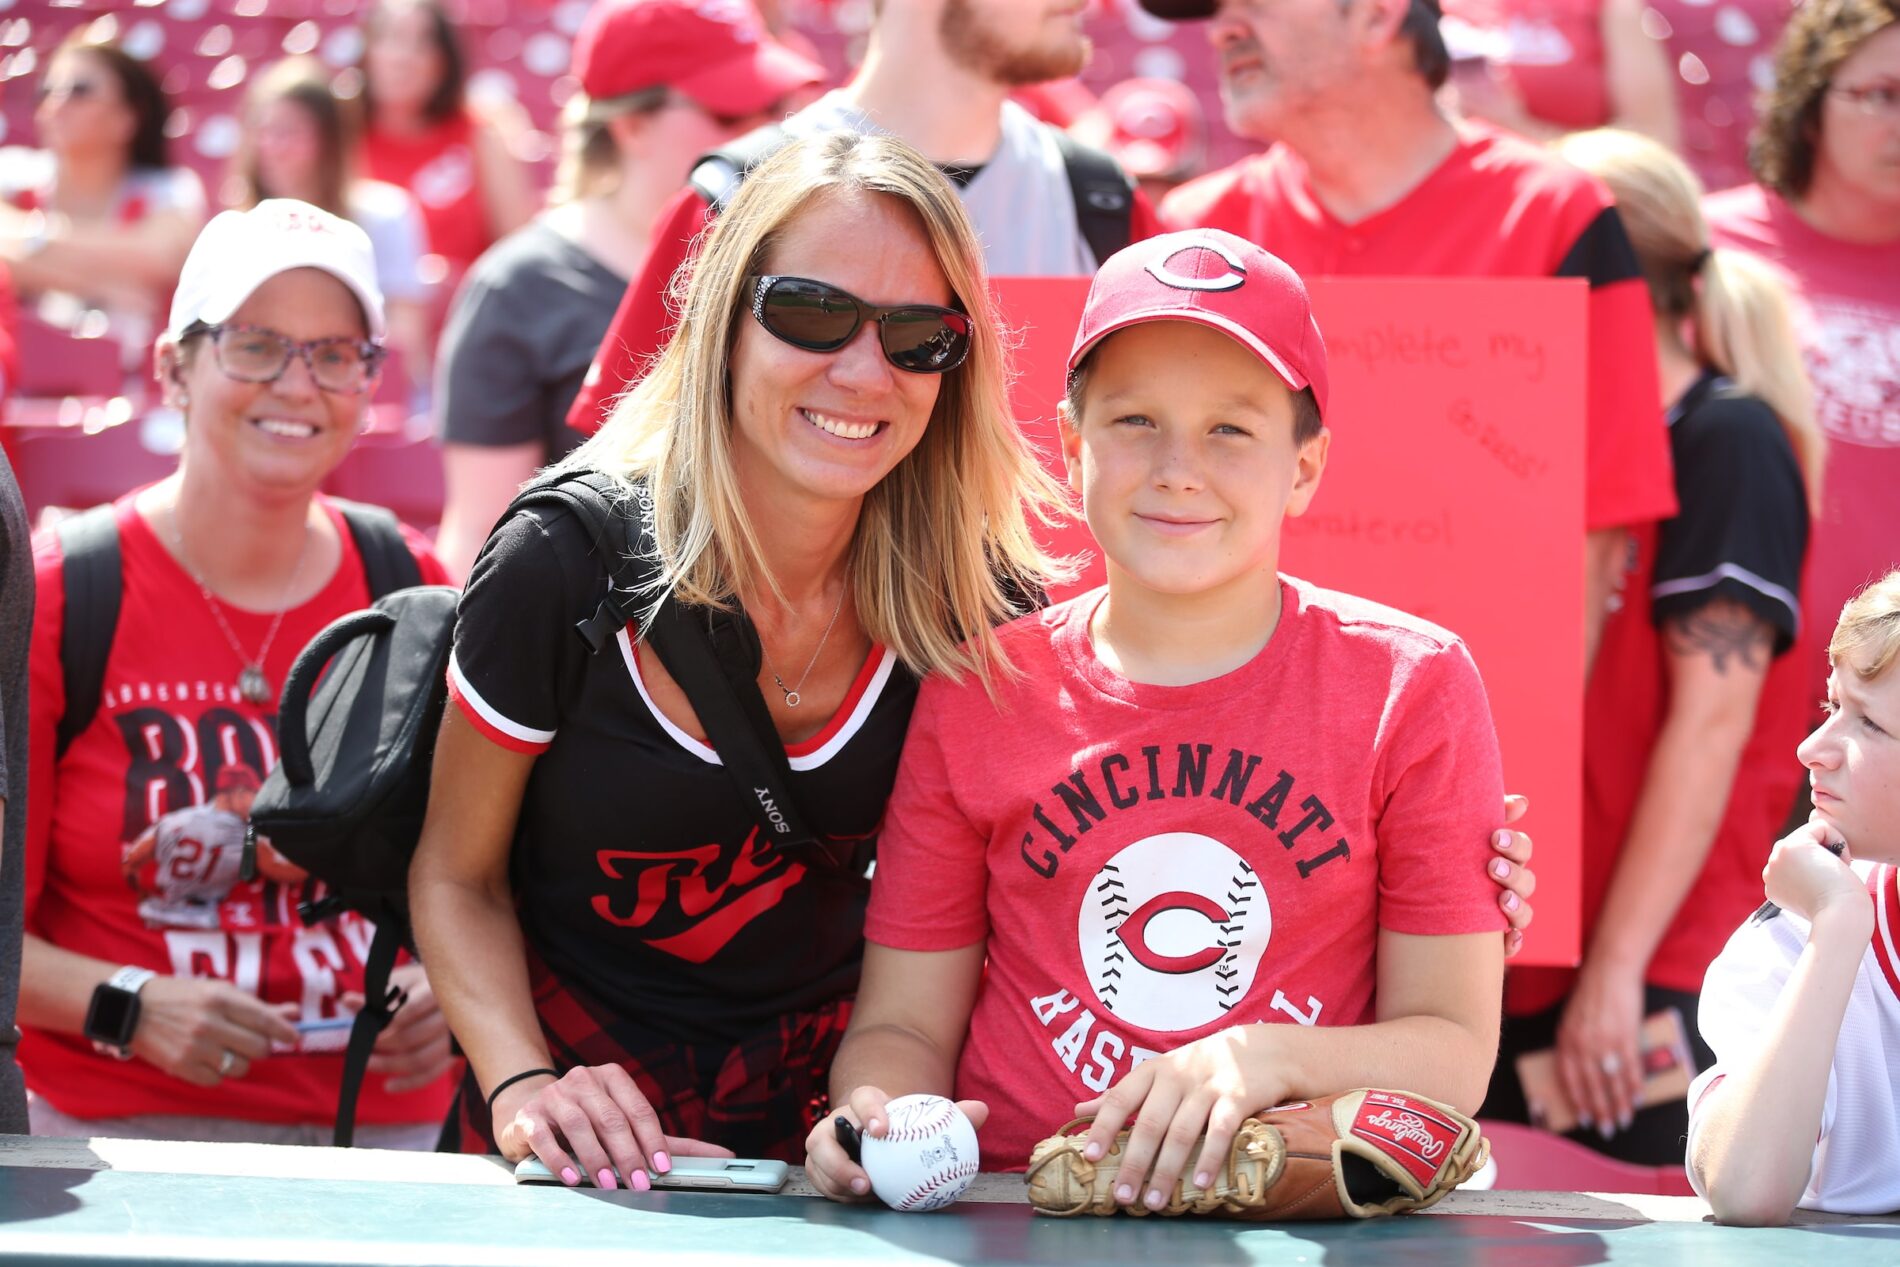 family attending Cincinnati Reds baseball game